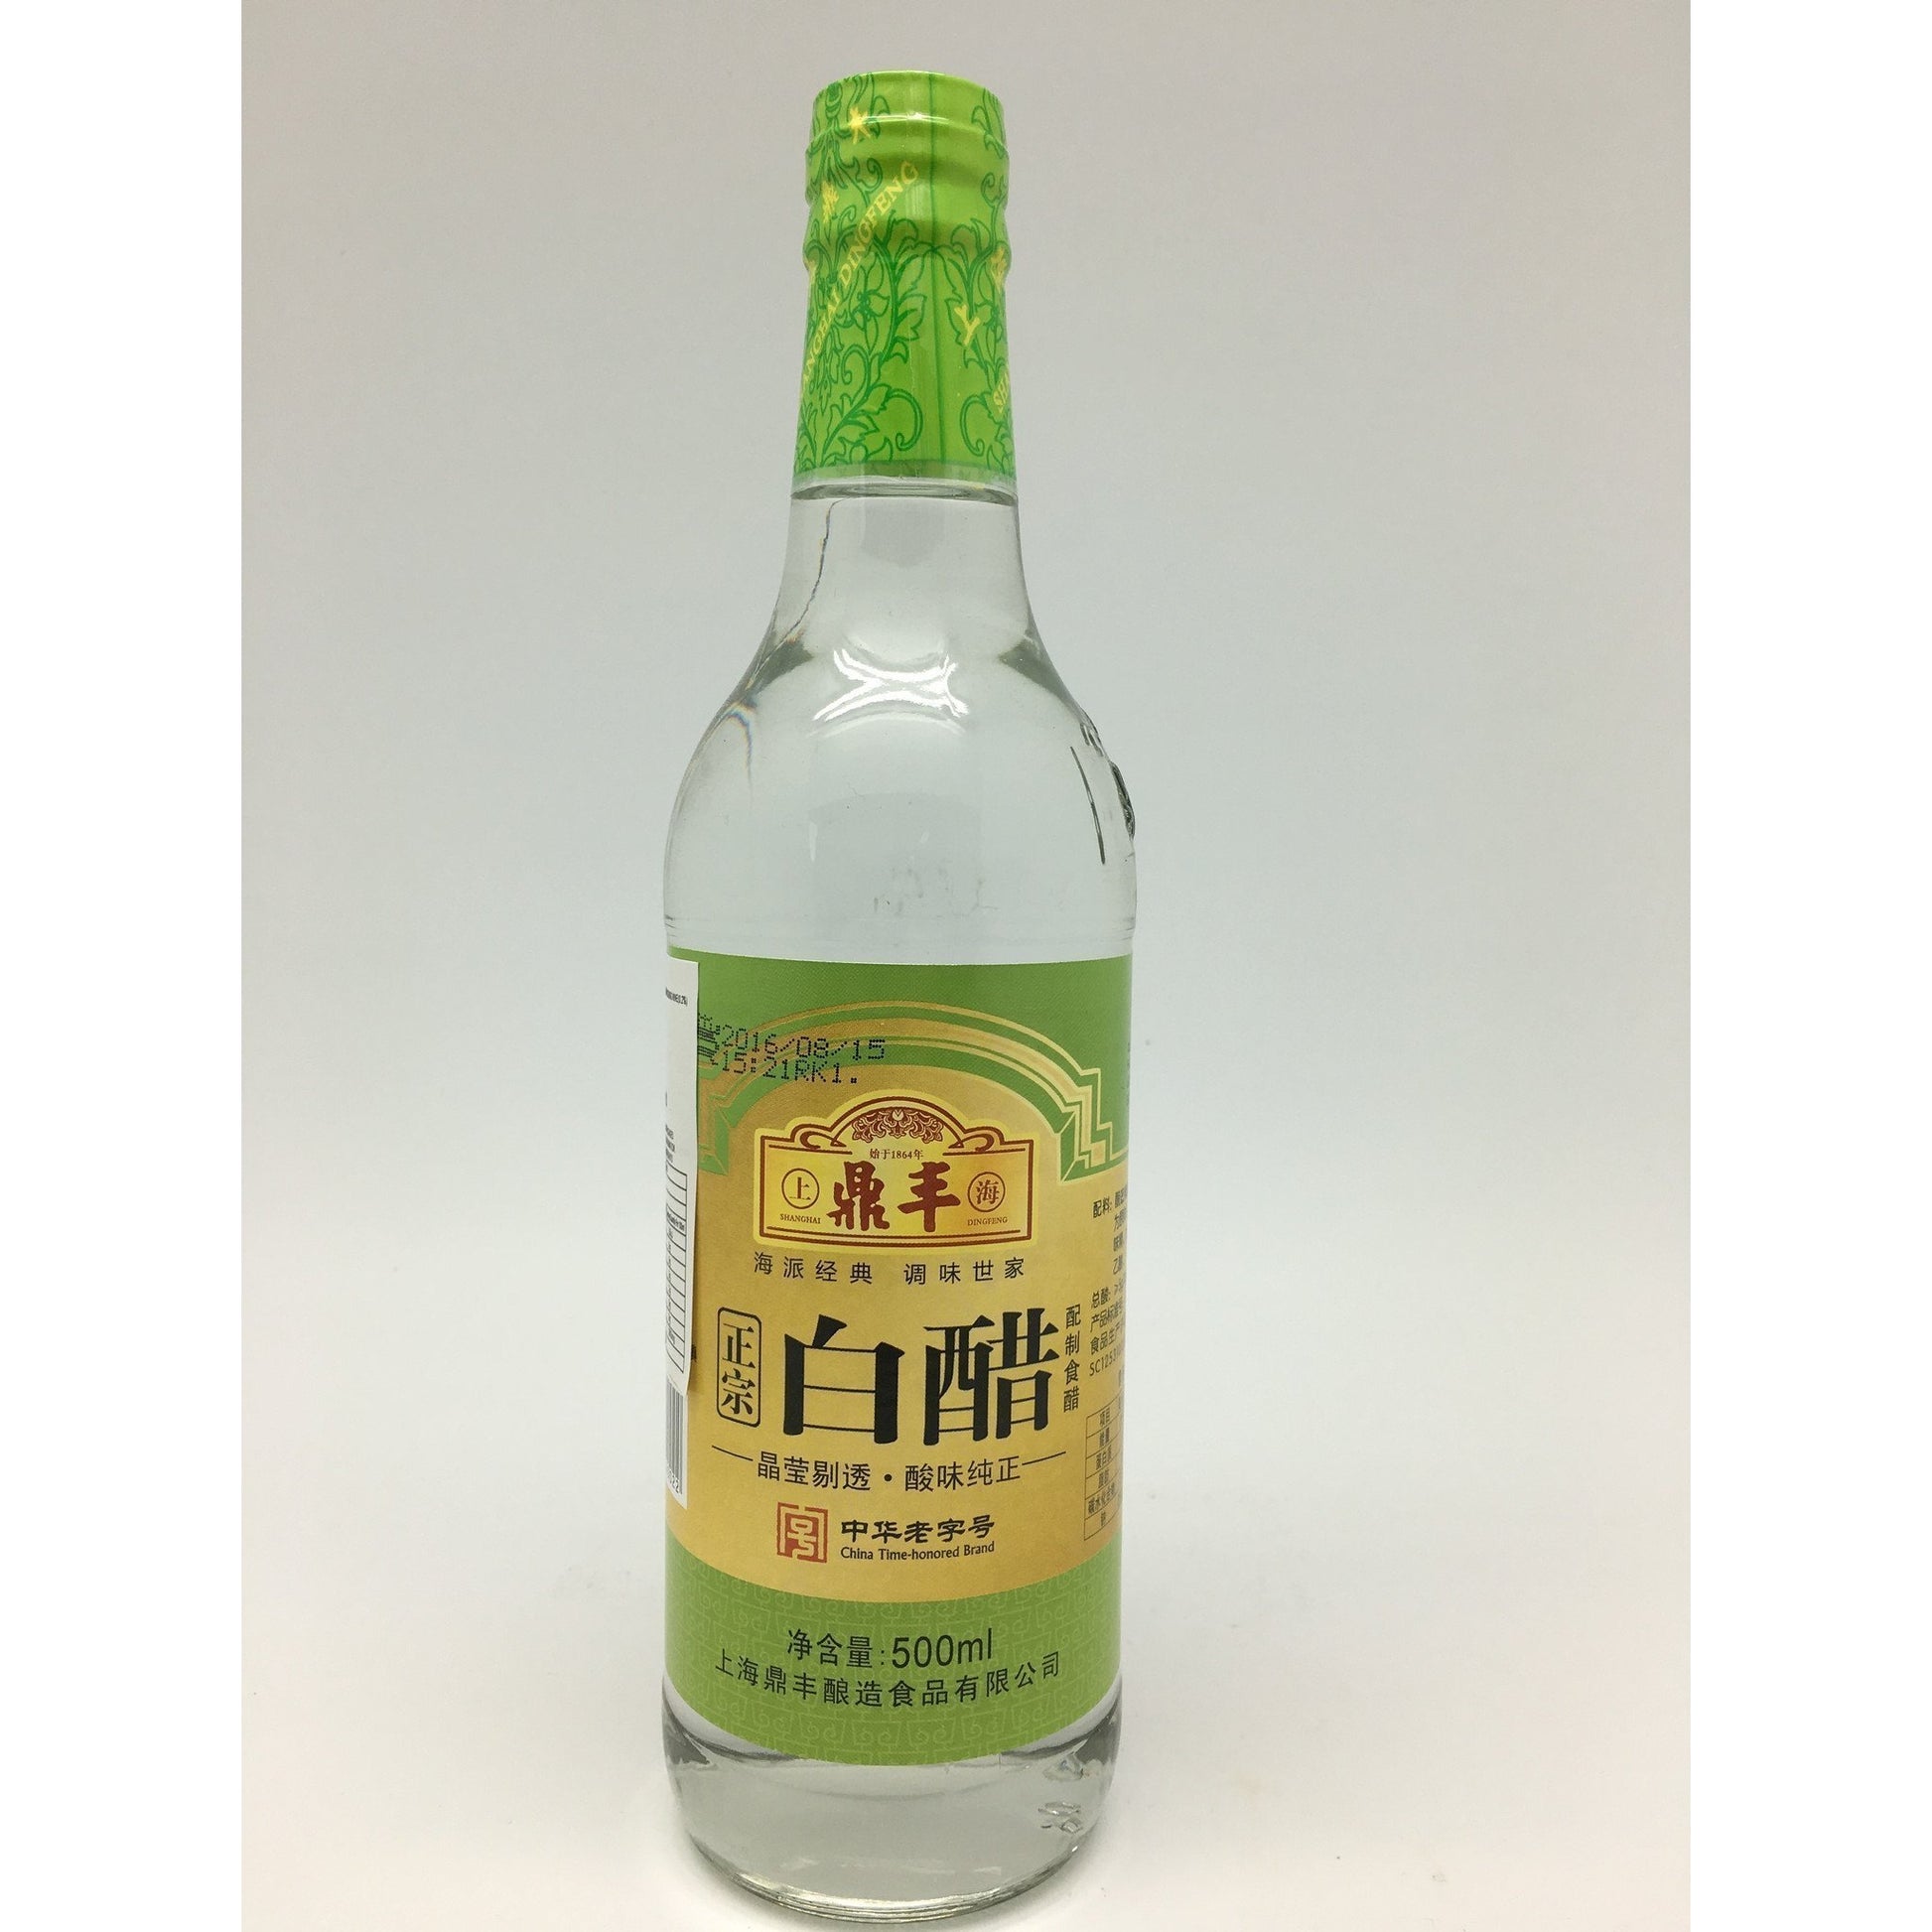 S112T Shanghai Dingfeng Brand - White Vinegar 500ml - 12 bot / 1CTN - New Eastland Pty Ltd - Asian food wholesalers